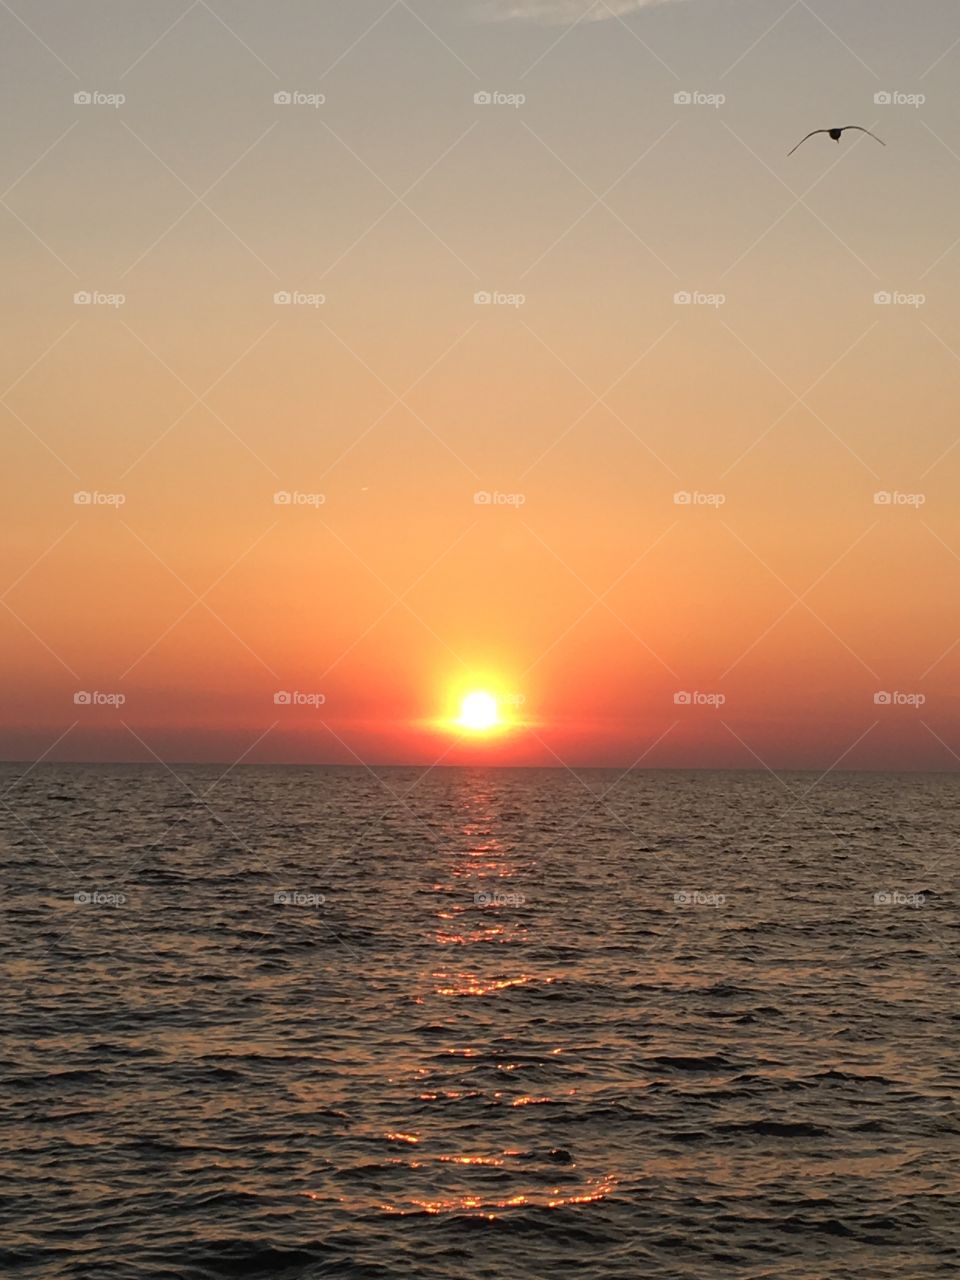 Sunset on Water